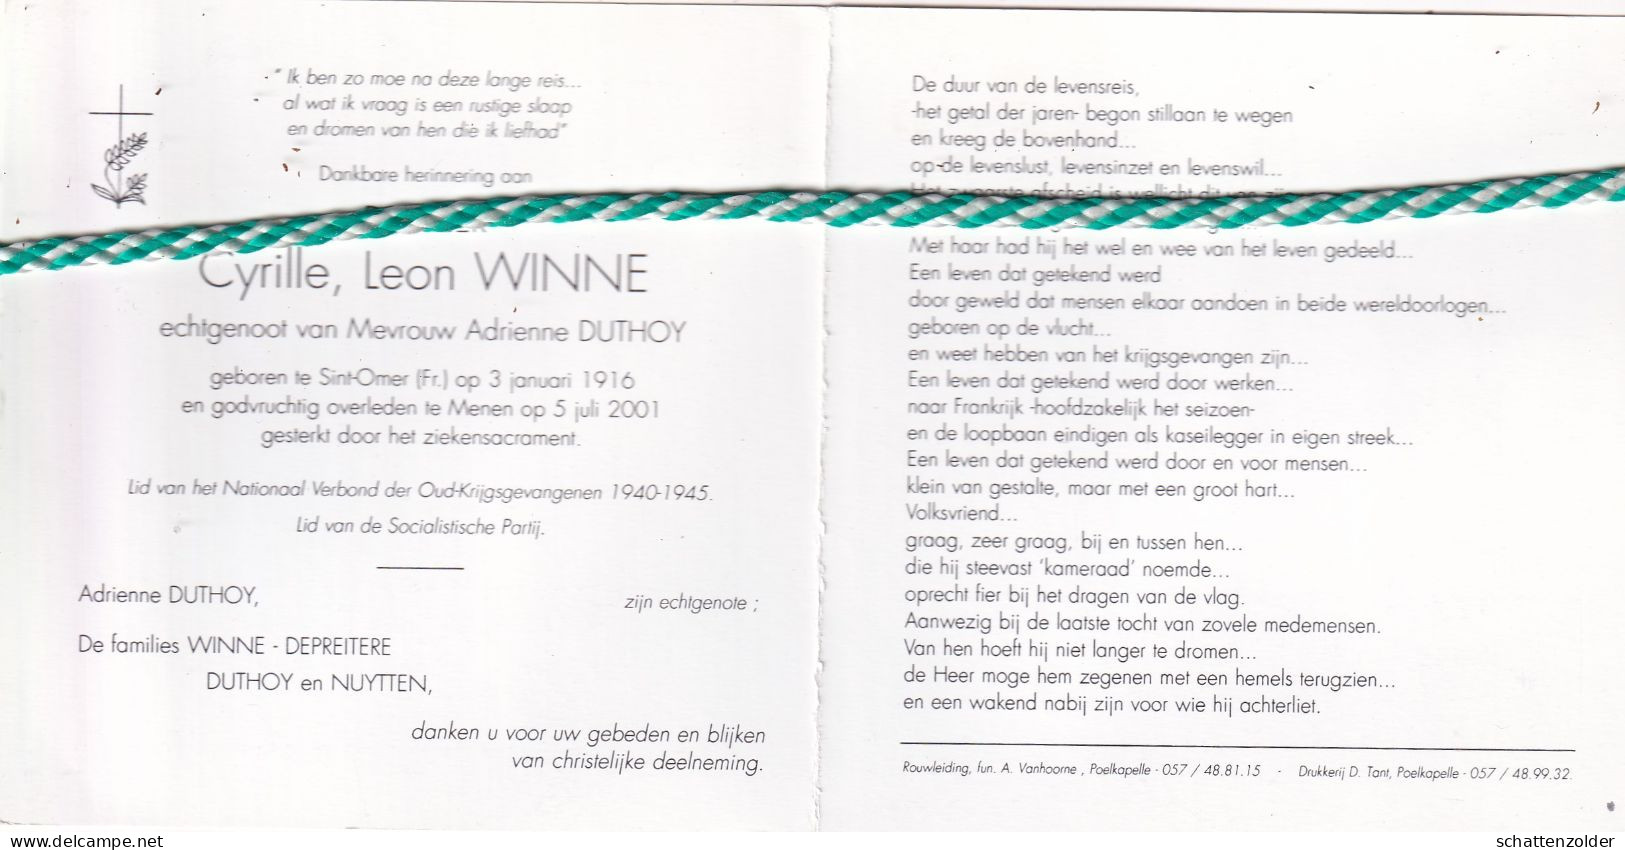 Cyrille Leon Winne-Duthoy, Sint-Omer (Fr) 1916, Menen 2001. Foto - Obituary Notices